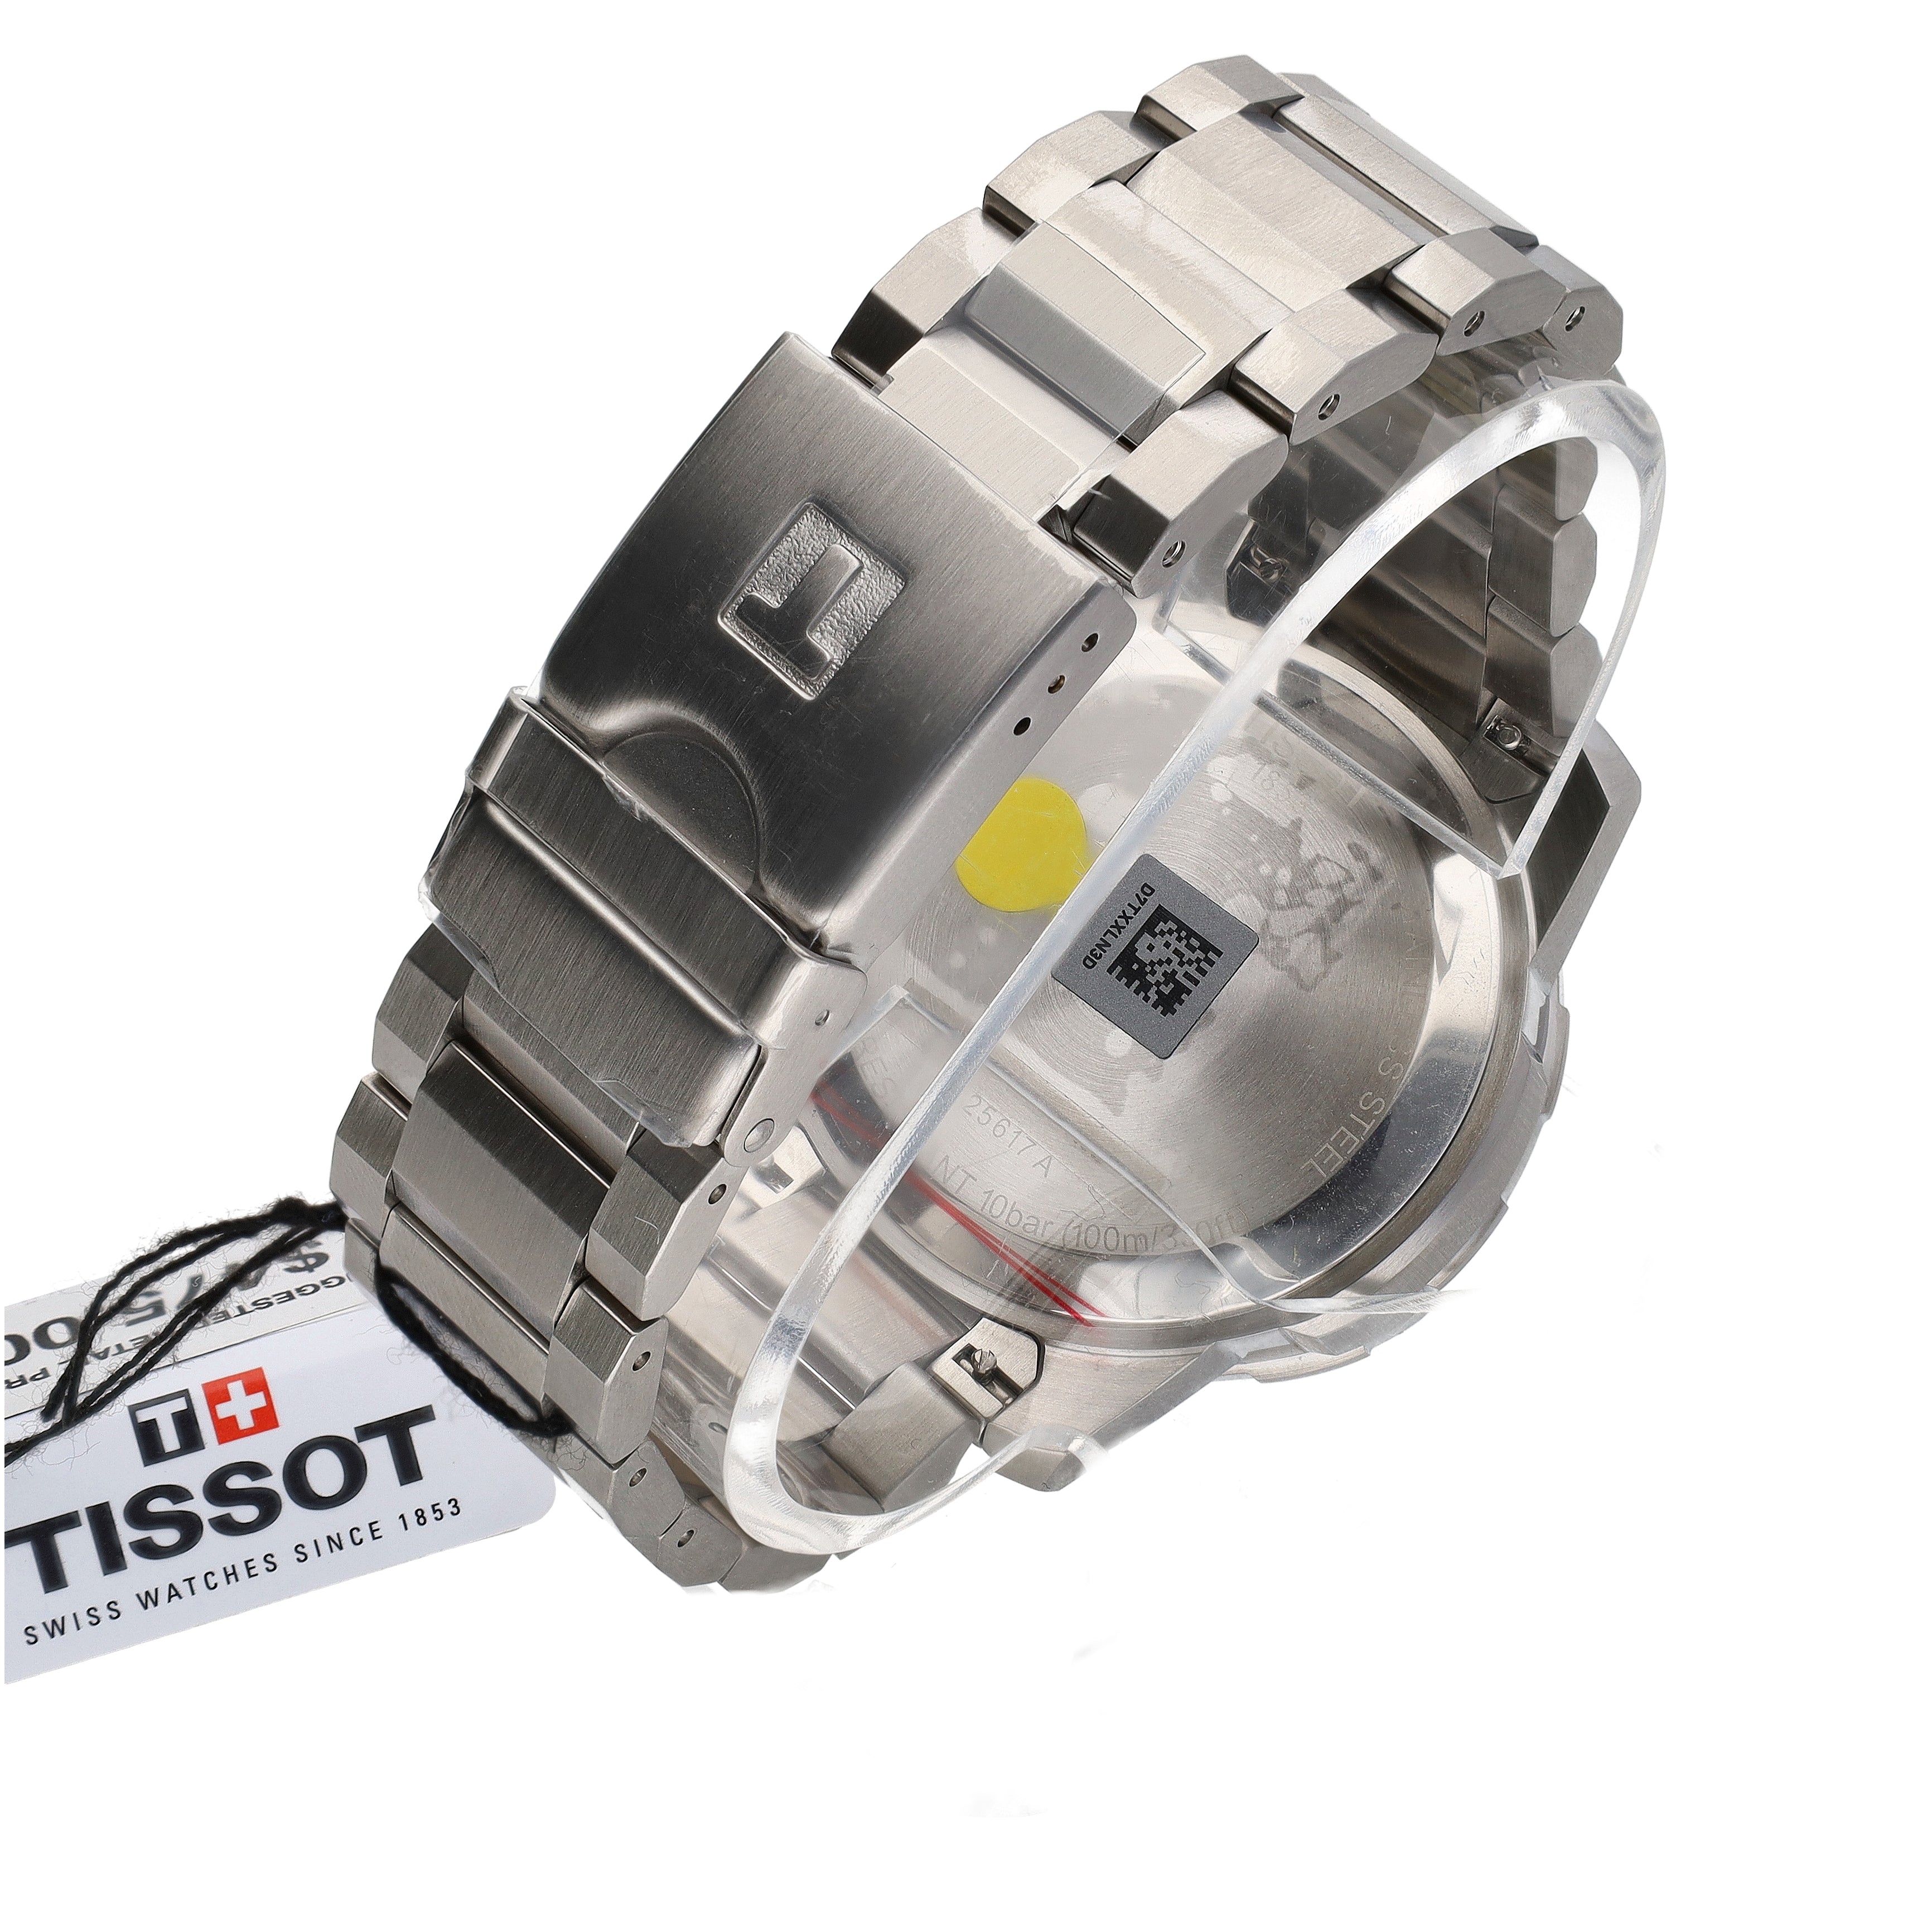 Tissot Supersport Chronograph Blue Dial Swiss Quartz Stainless Watch T125.617.11.041.00